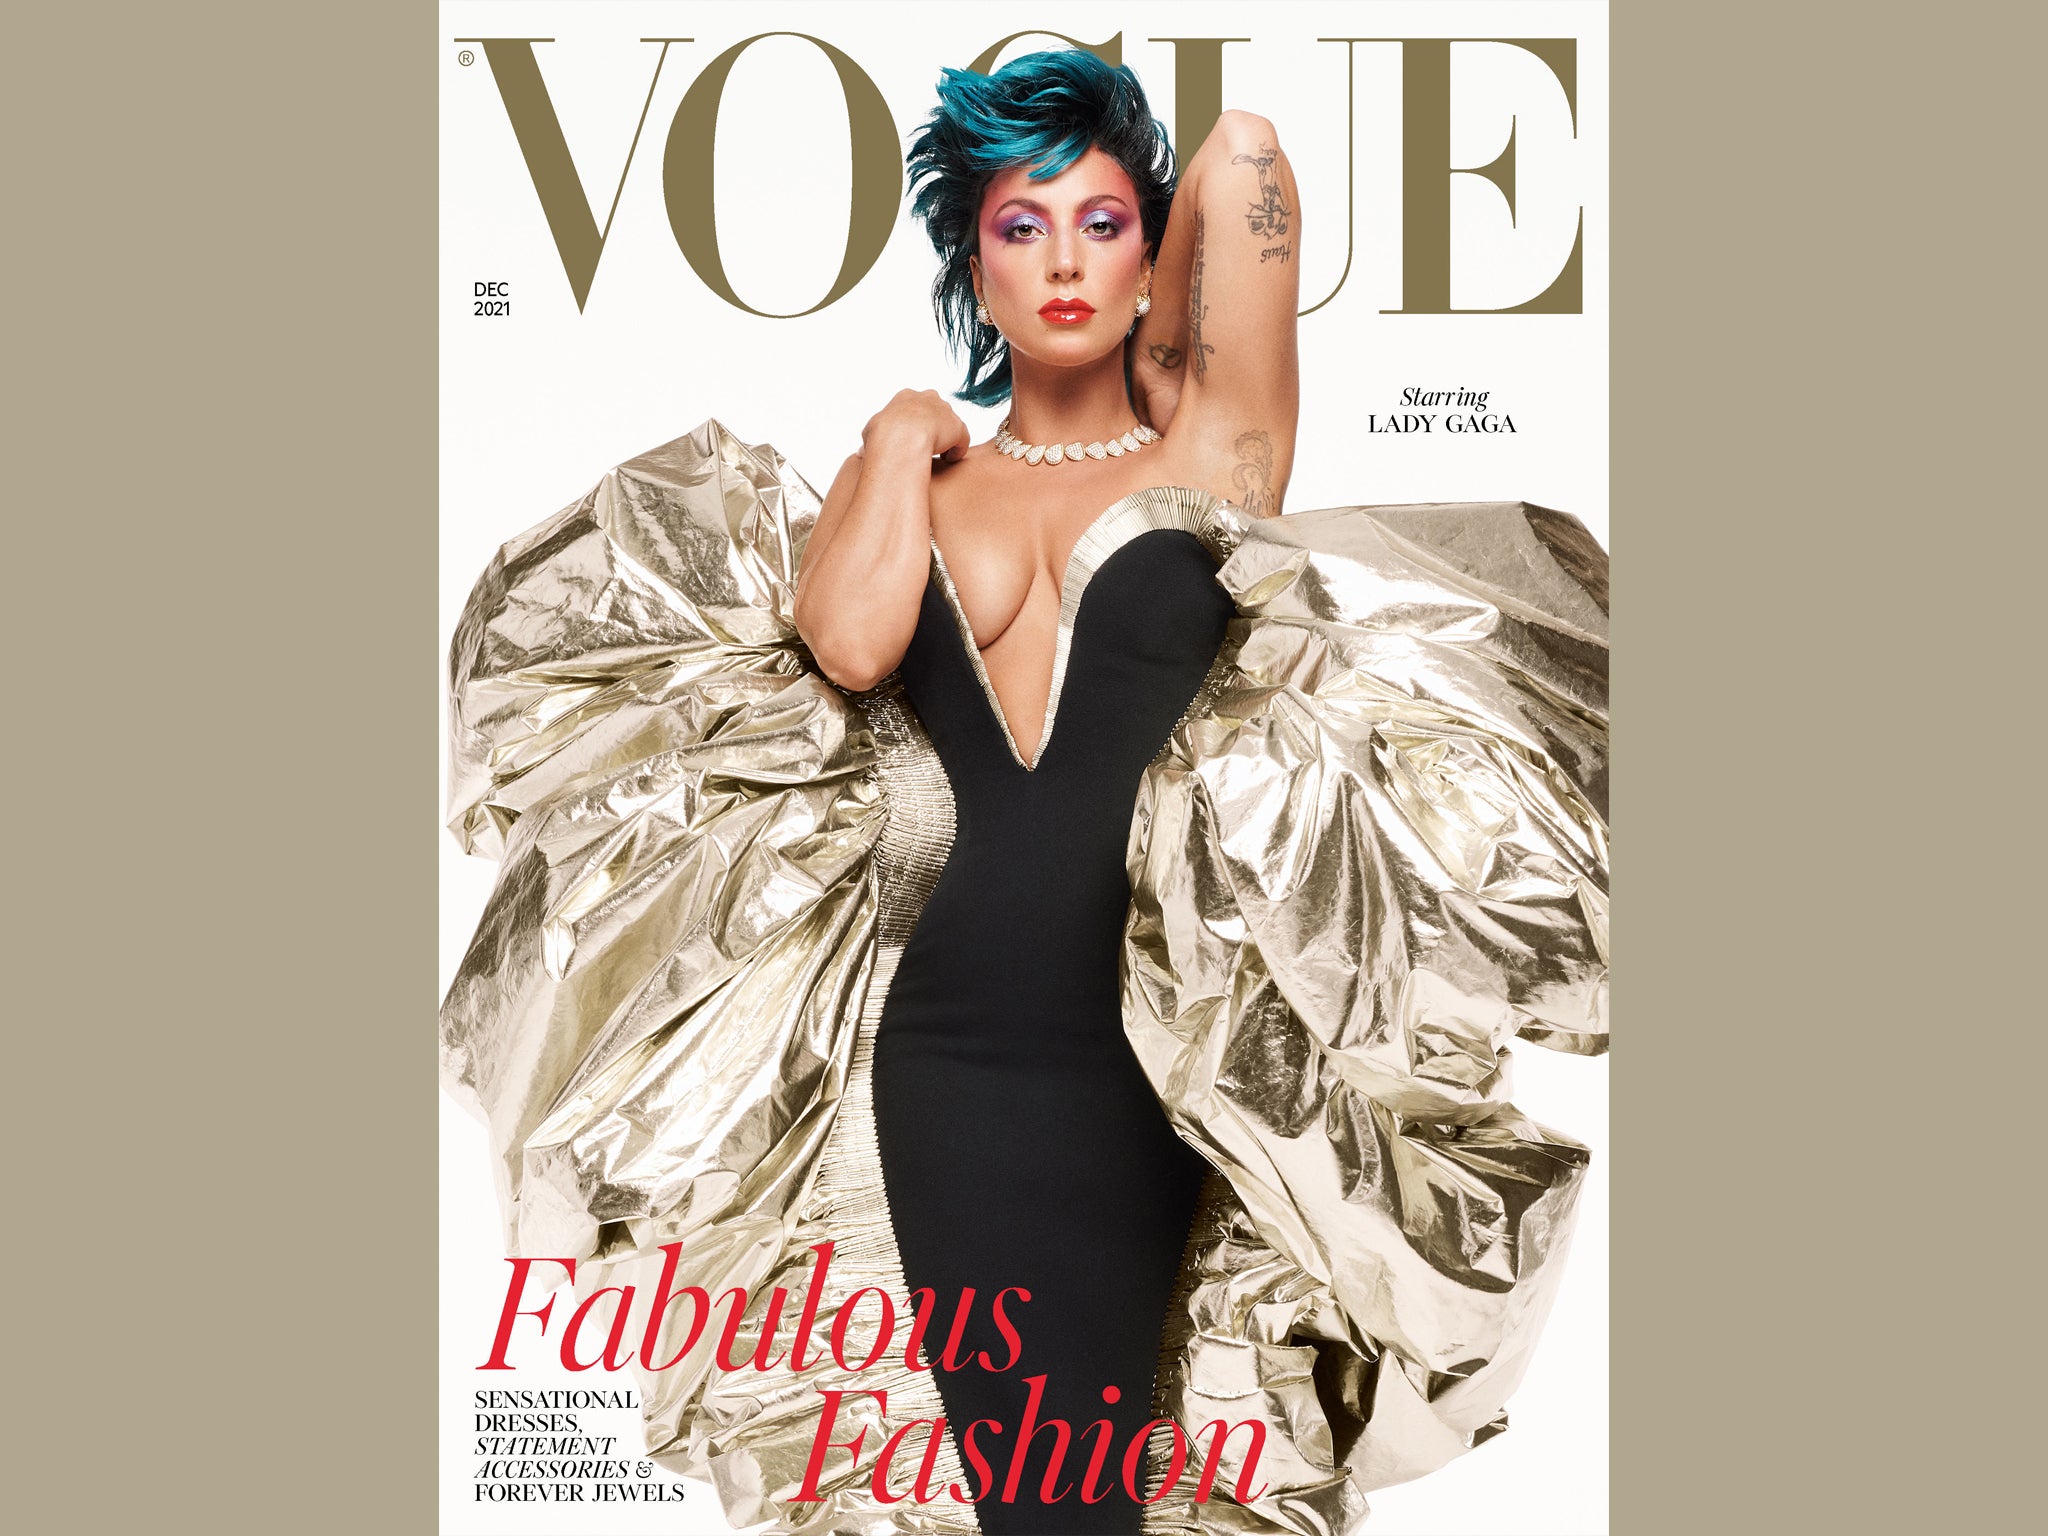 Lady Gaga for British Vogue